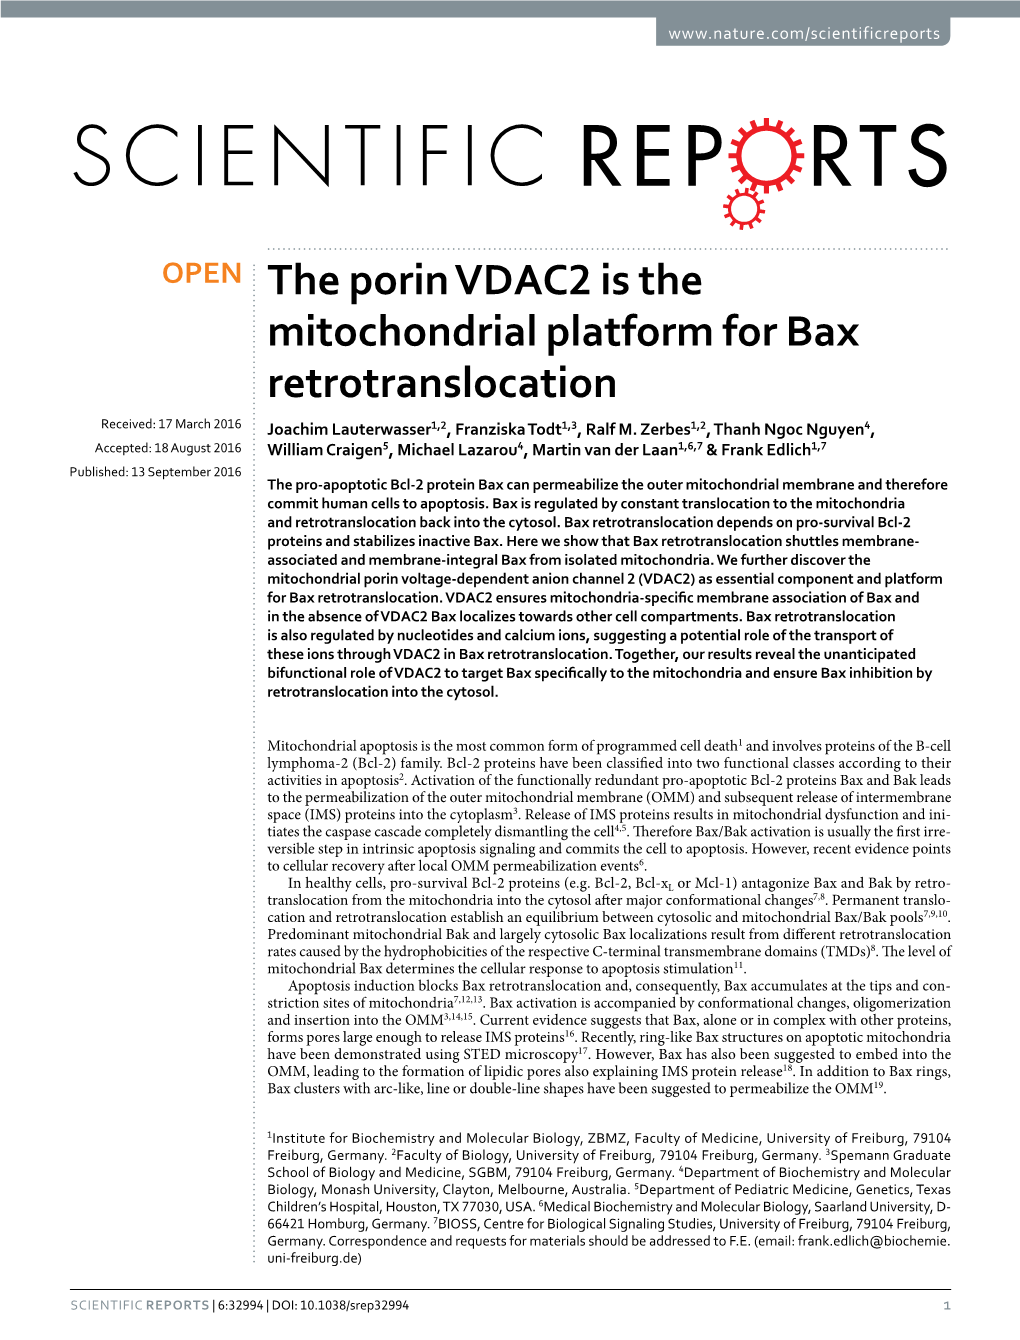 The Porin VDAC2 Is the Mitochondrial Platform for Bax Retrotranslocation Received: 17 March 2016 Joachim Lauterwasser1,2, Franziska Todt1,3, Ralf M